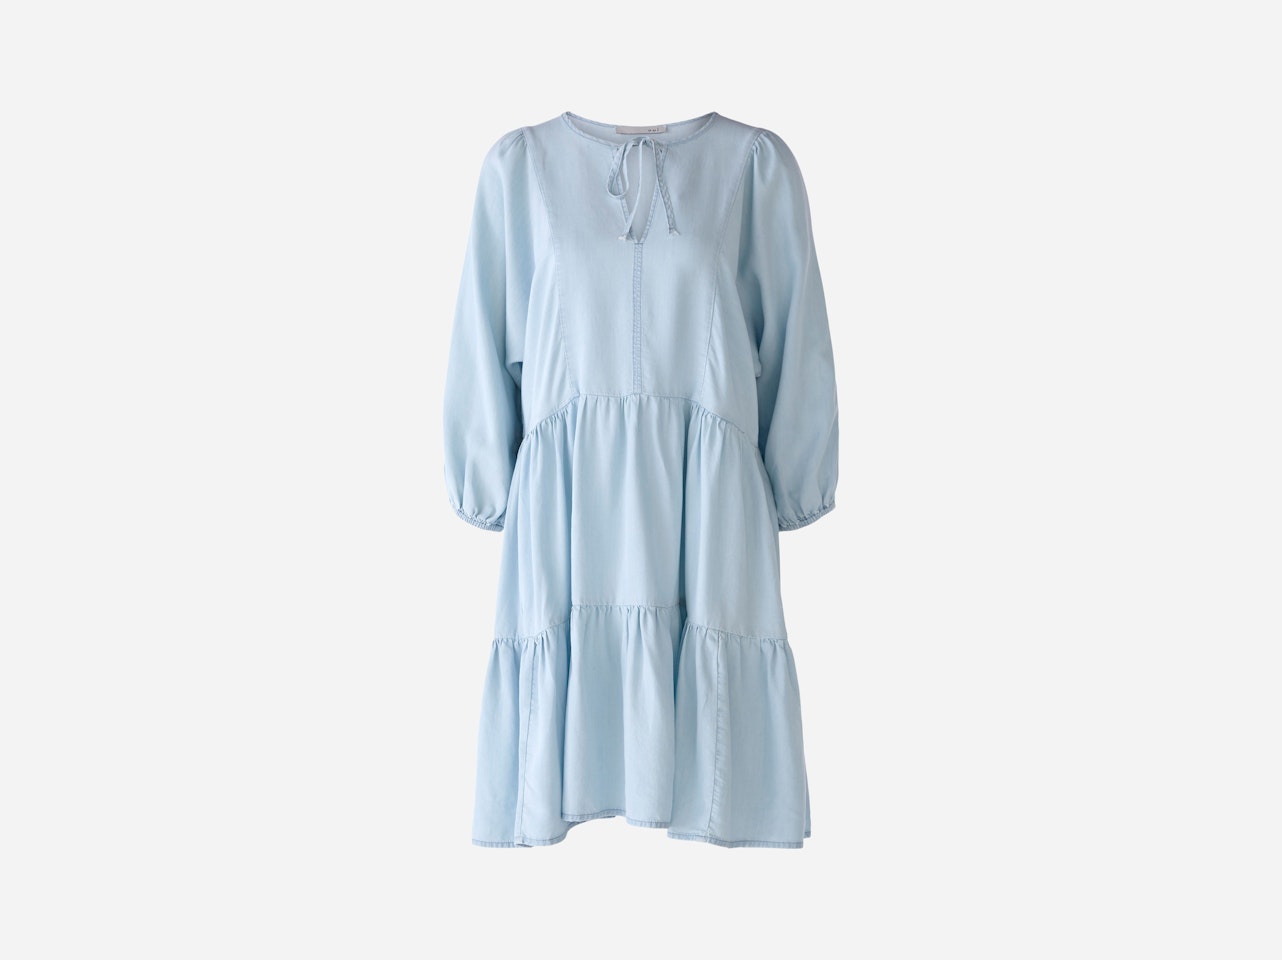 Bild 1 von Flounce dress  in soft denim-lyocell quality in blue denim | Oui